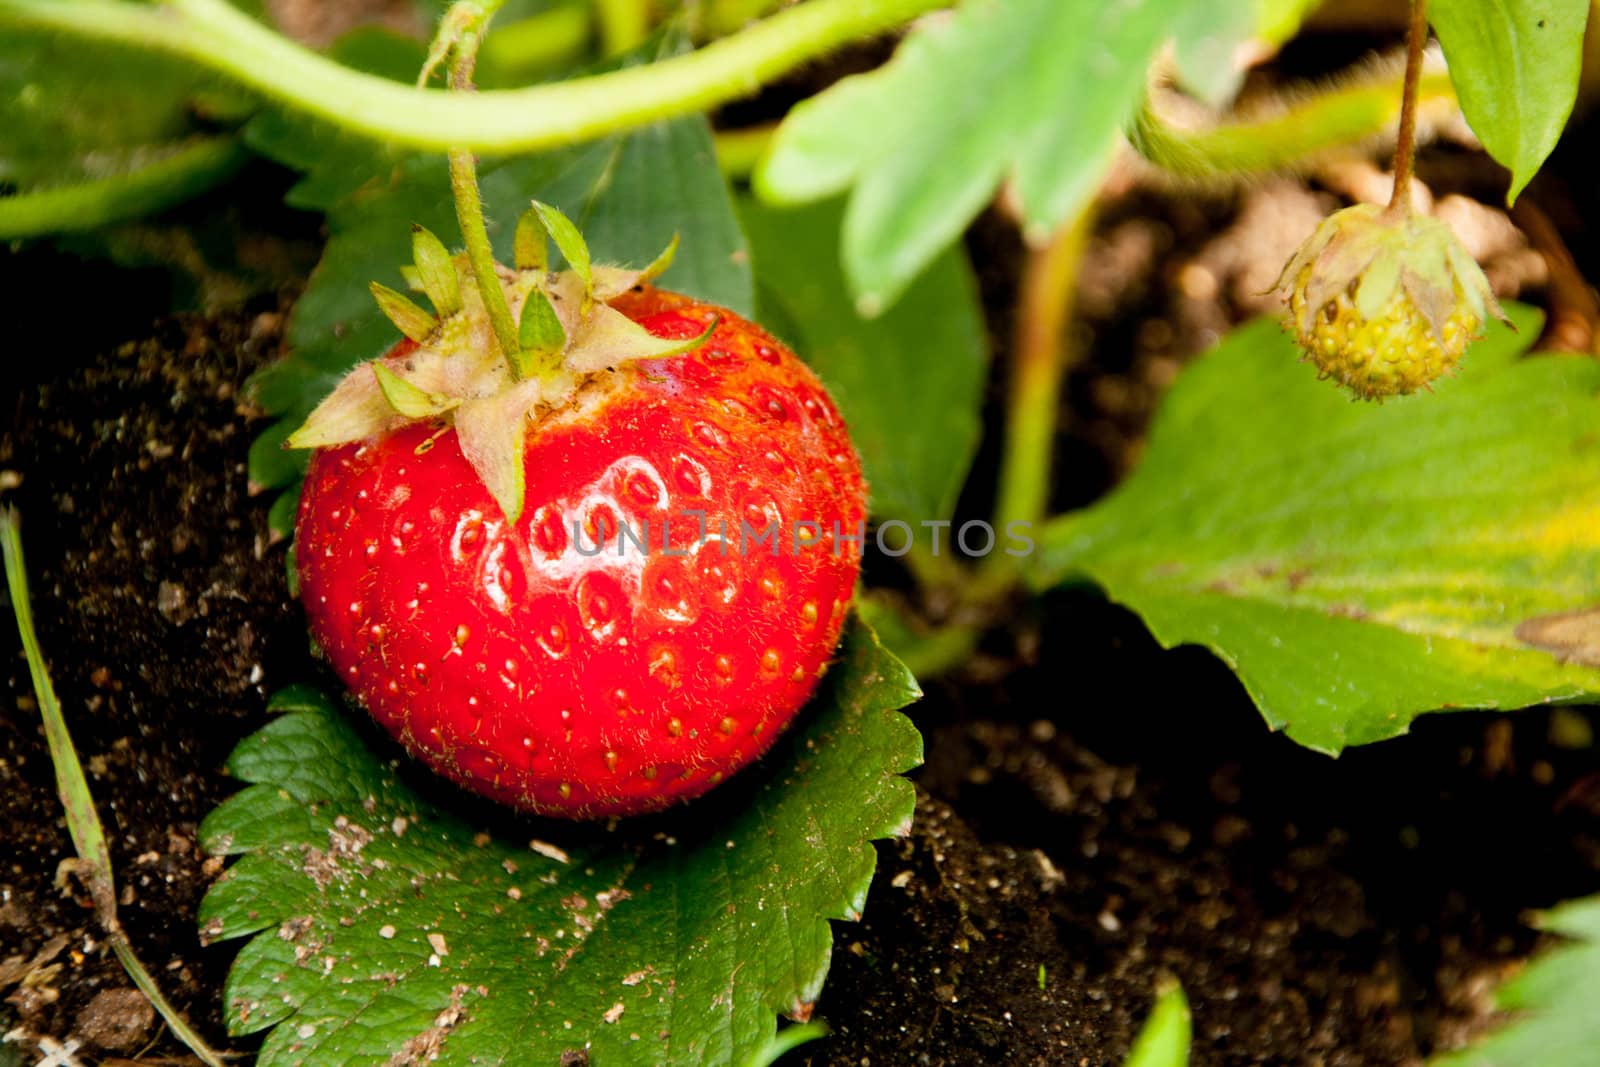 red ripe strawberries in the garden  by alexx60